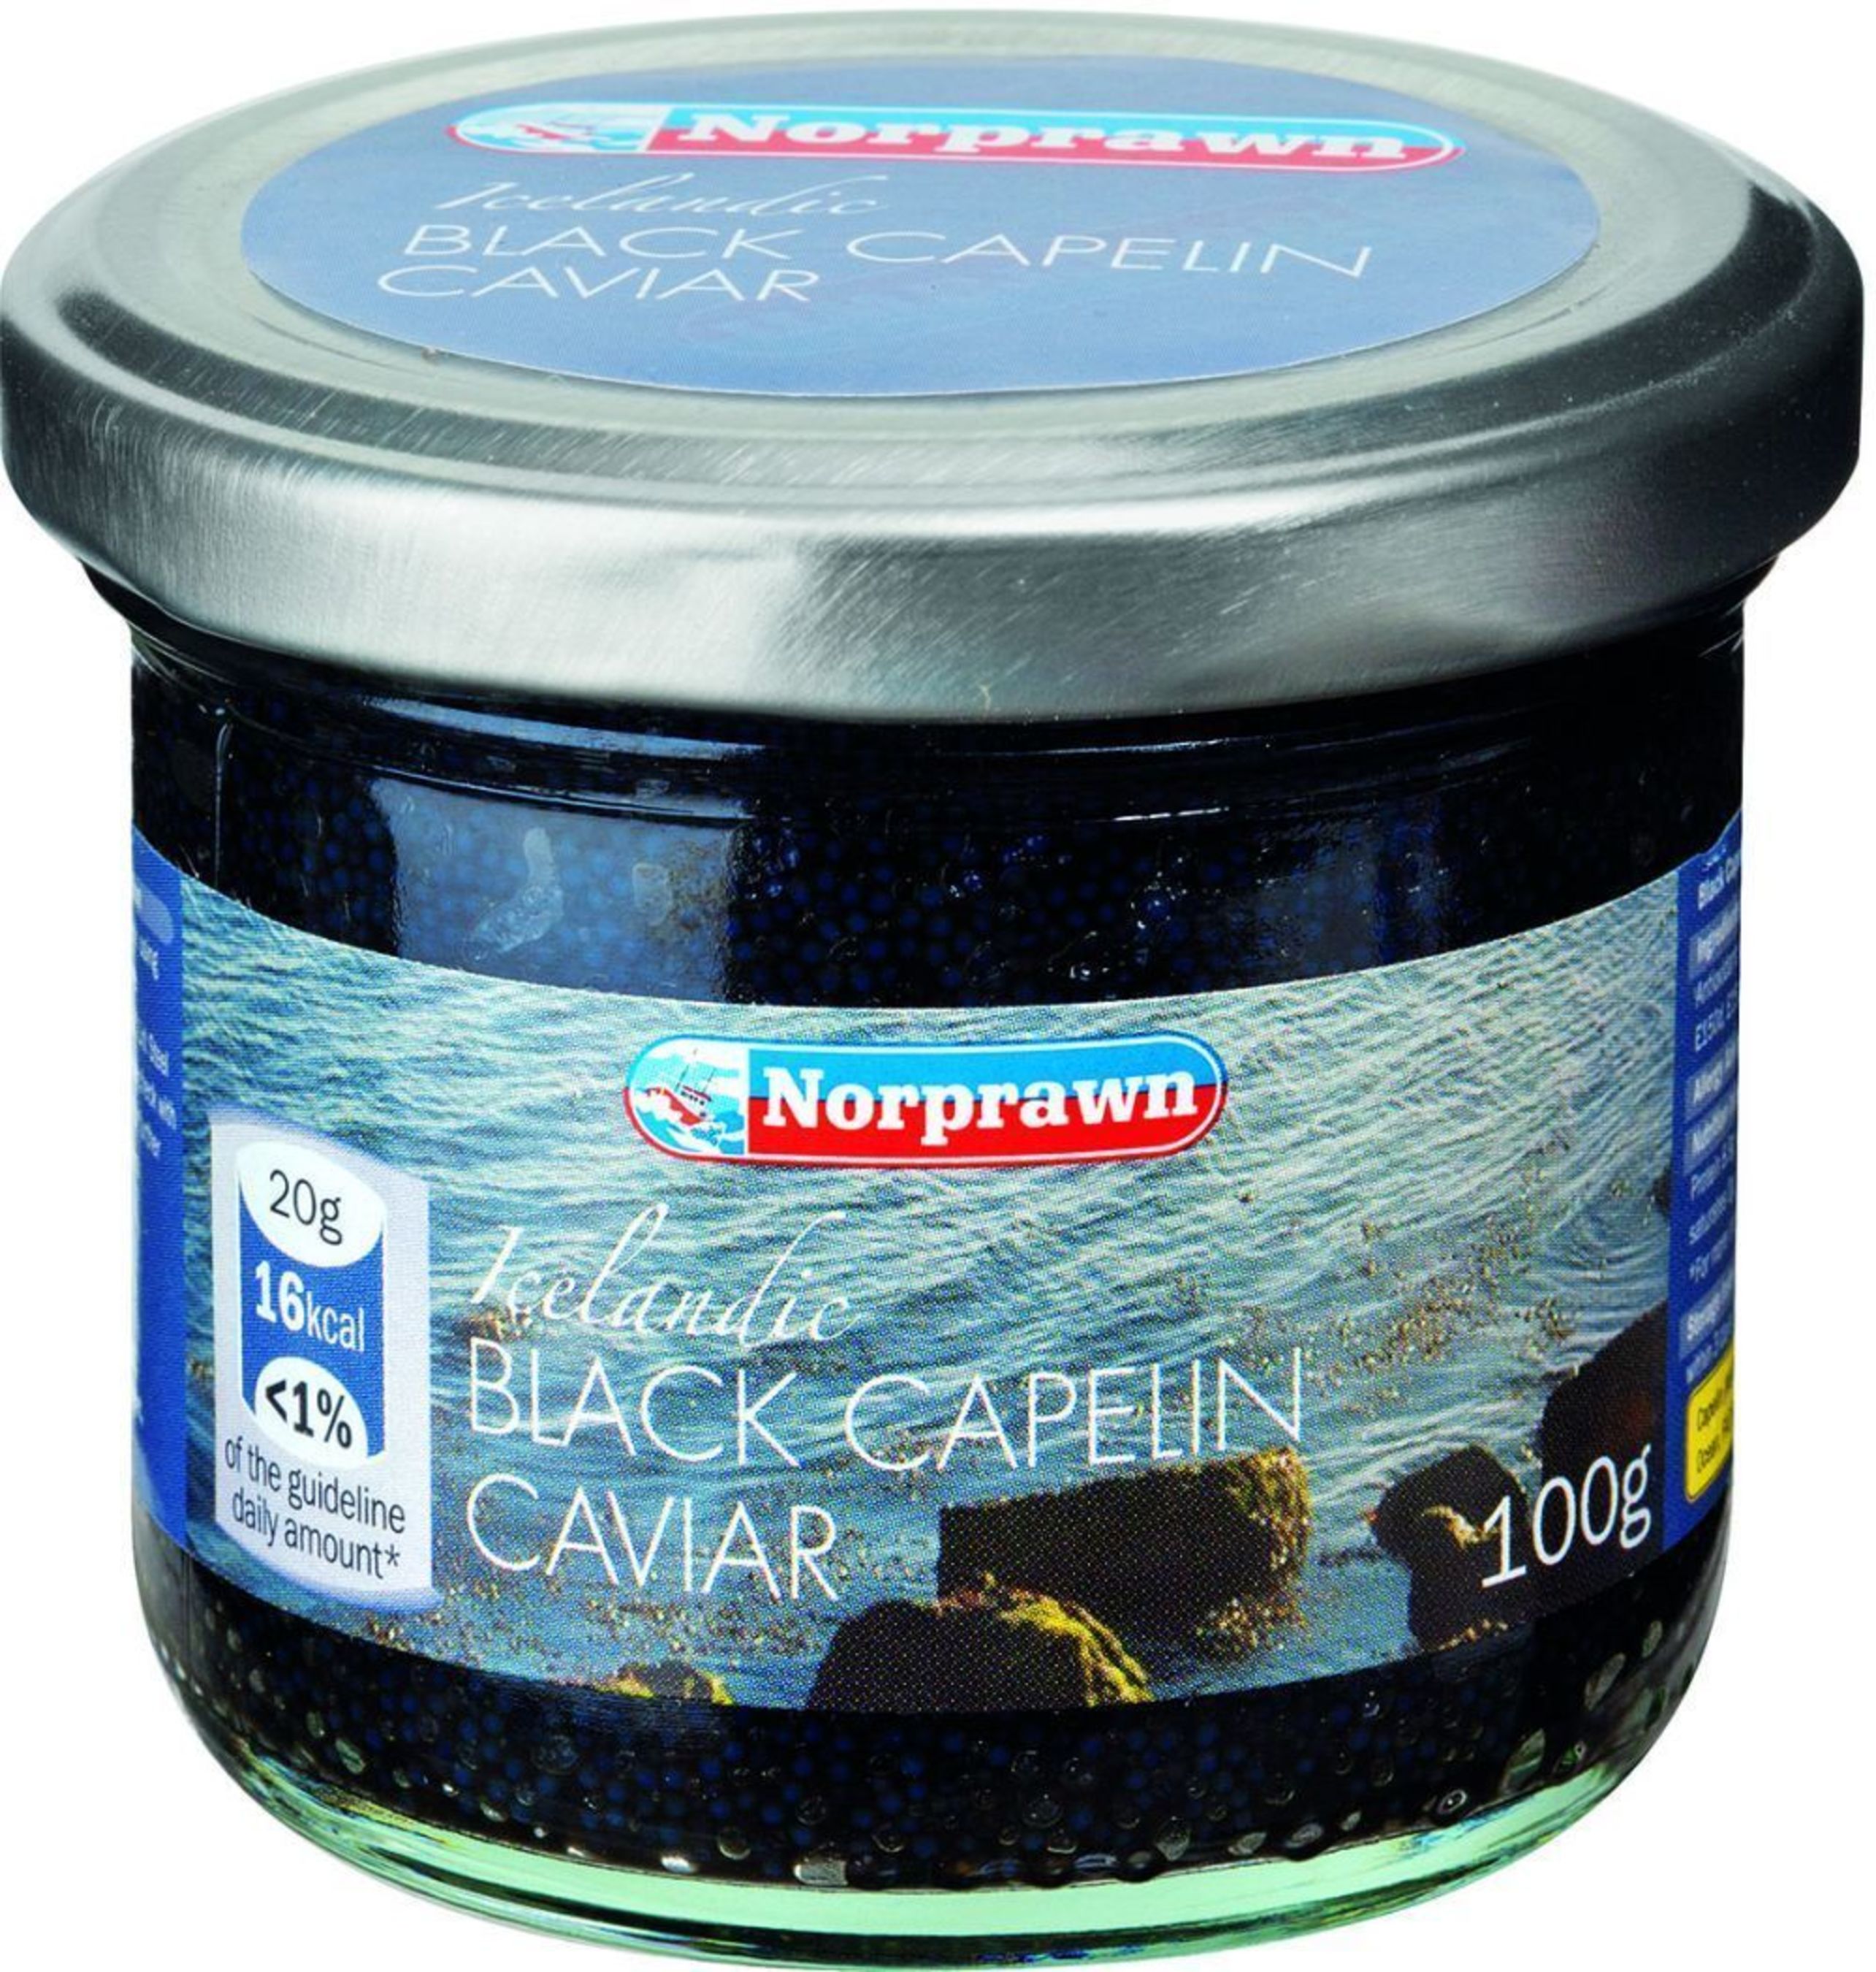 Lidl Norprawn Icelandic Black Capelin Caviar (PRNewsFoto/Lidl UK)